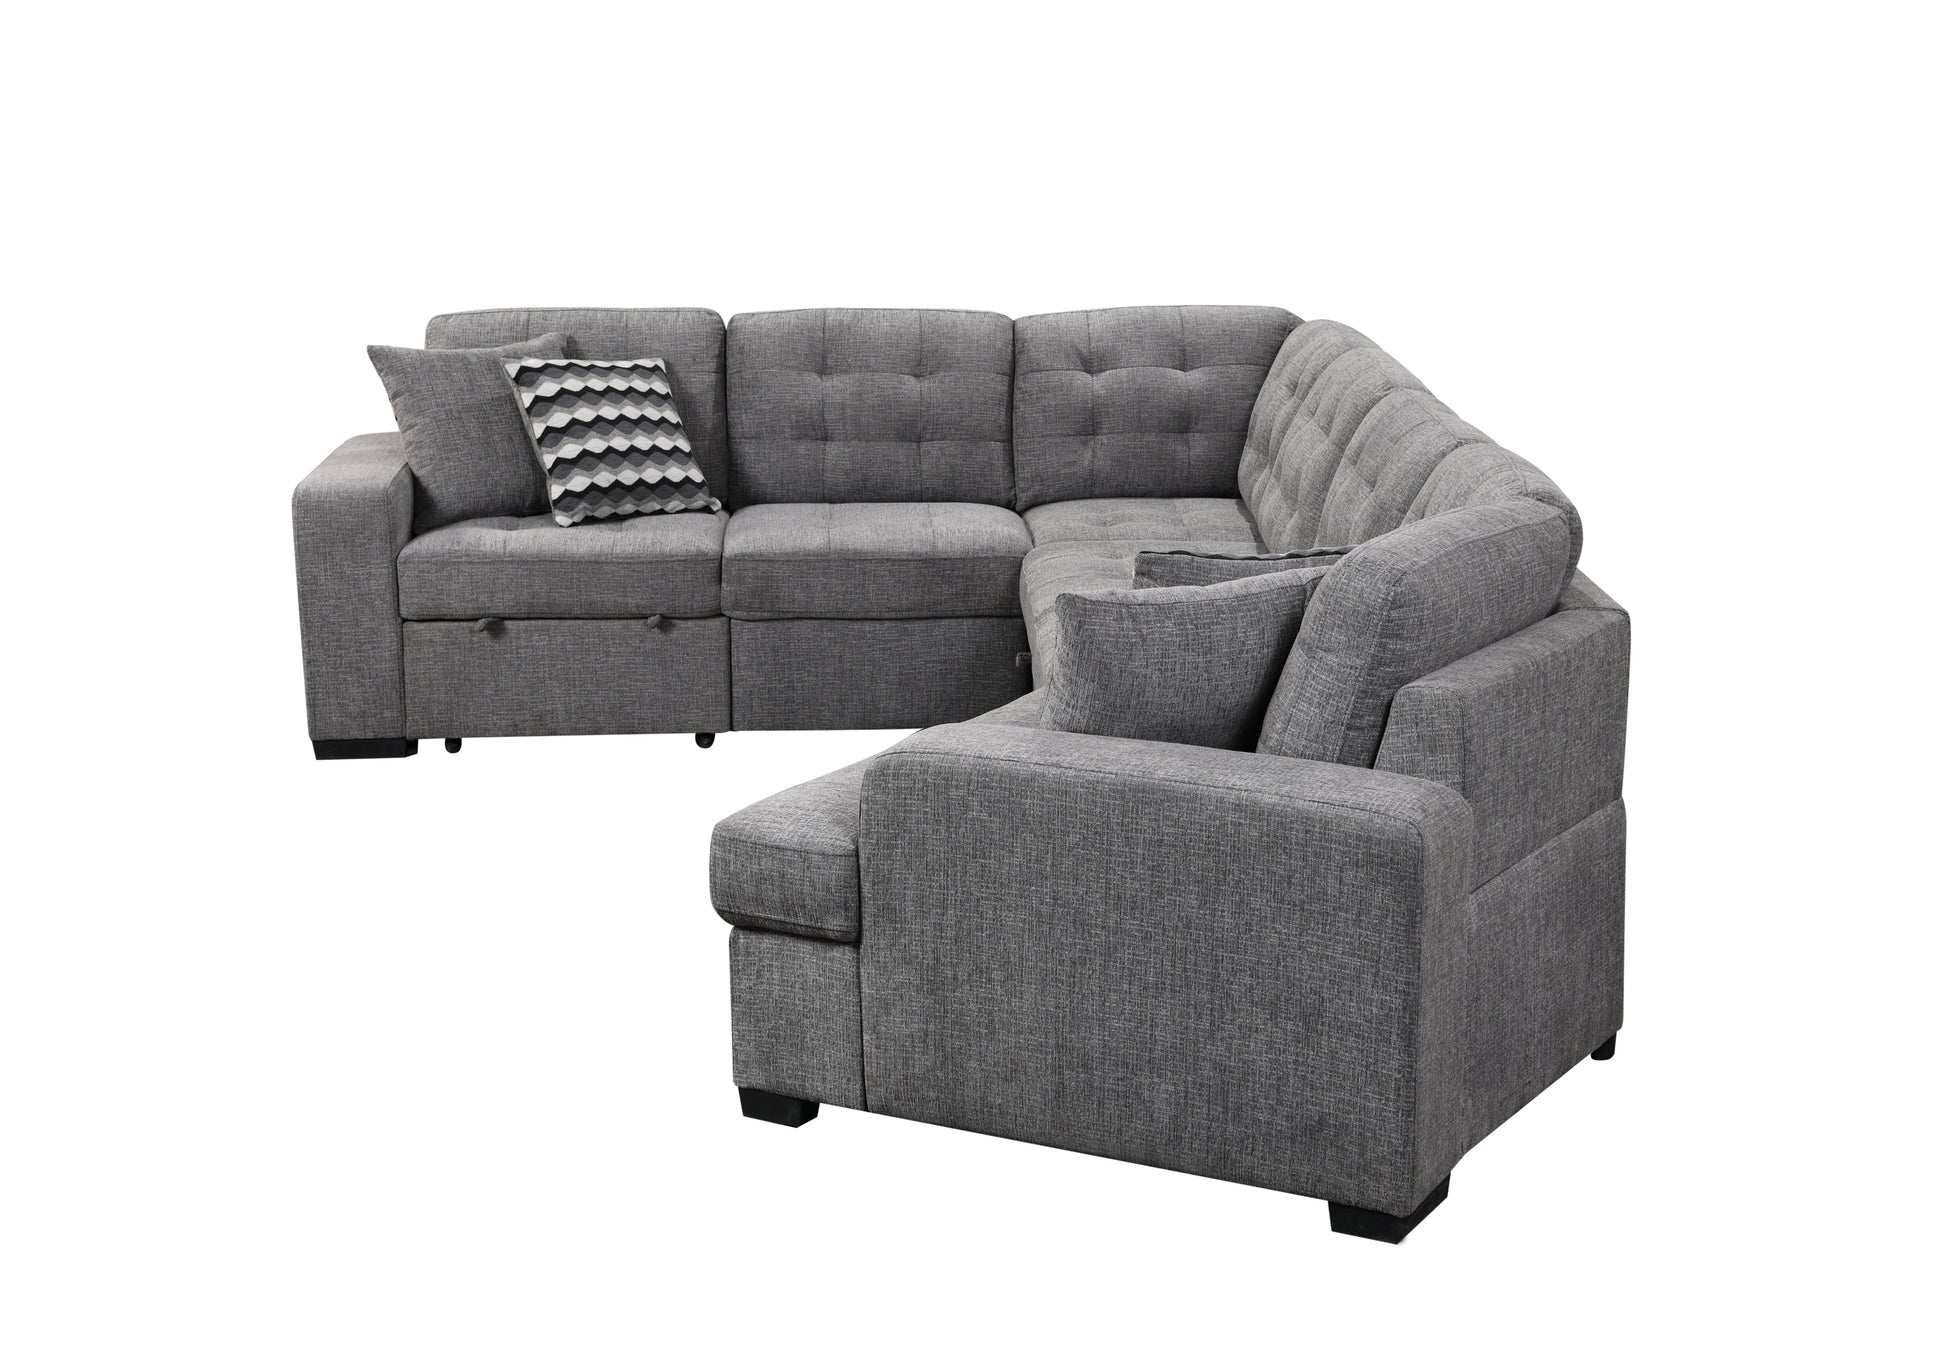 U-Shape Sectional Sofa, Oversized, Wide Chaise, Grey